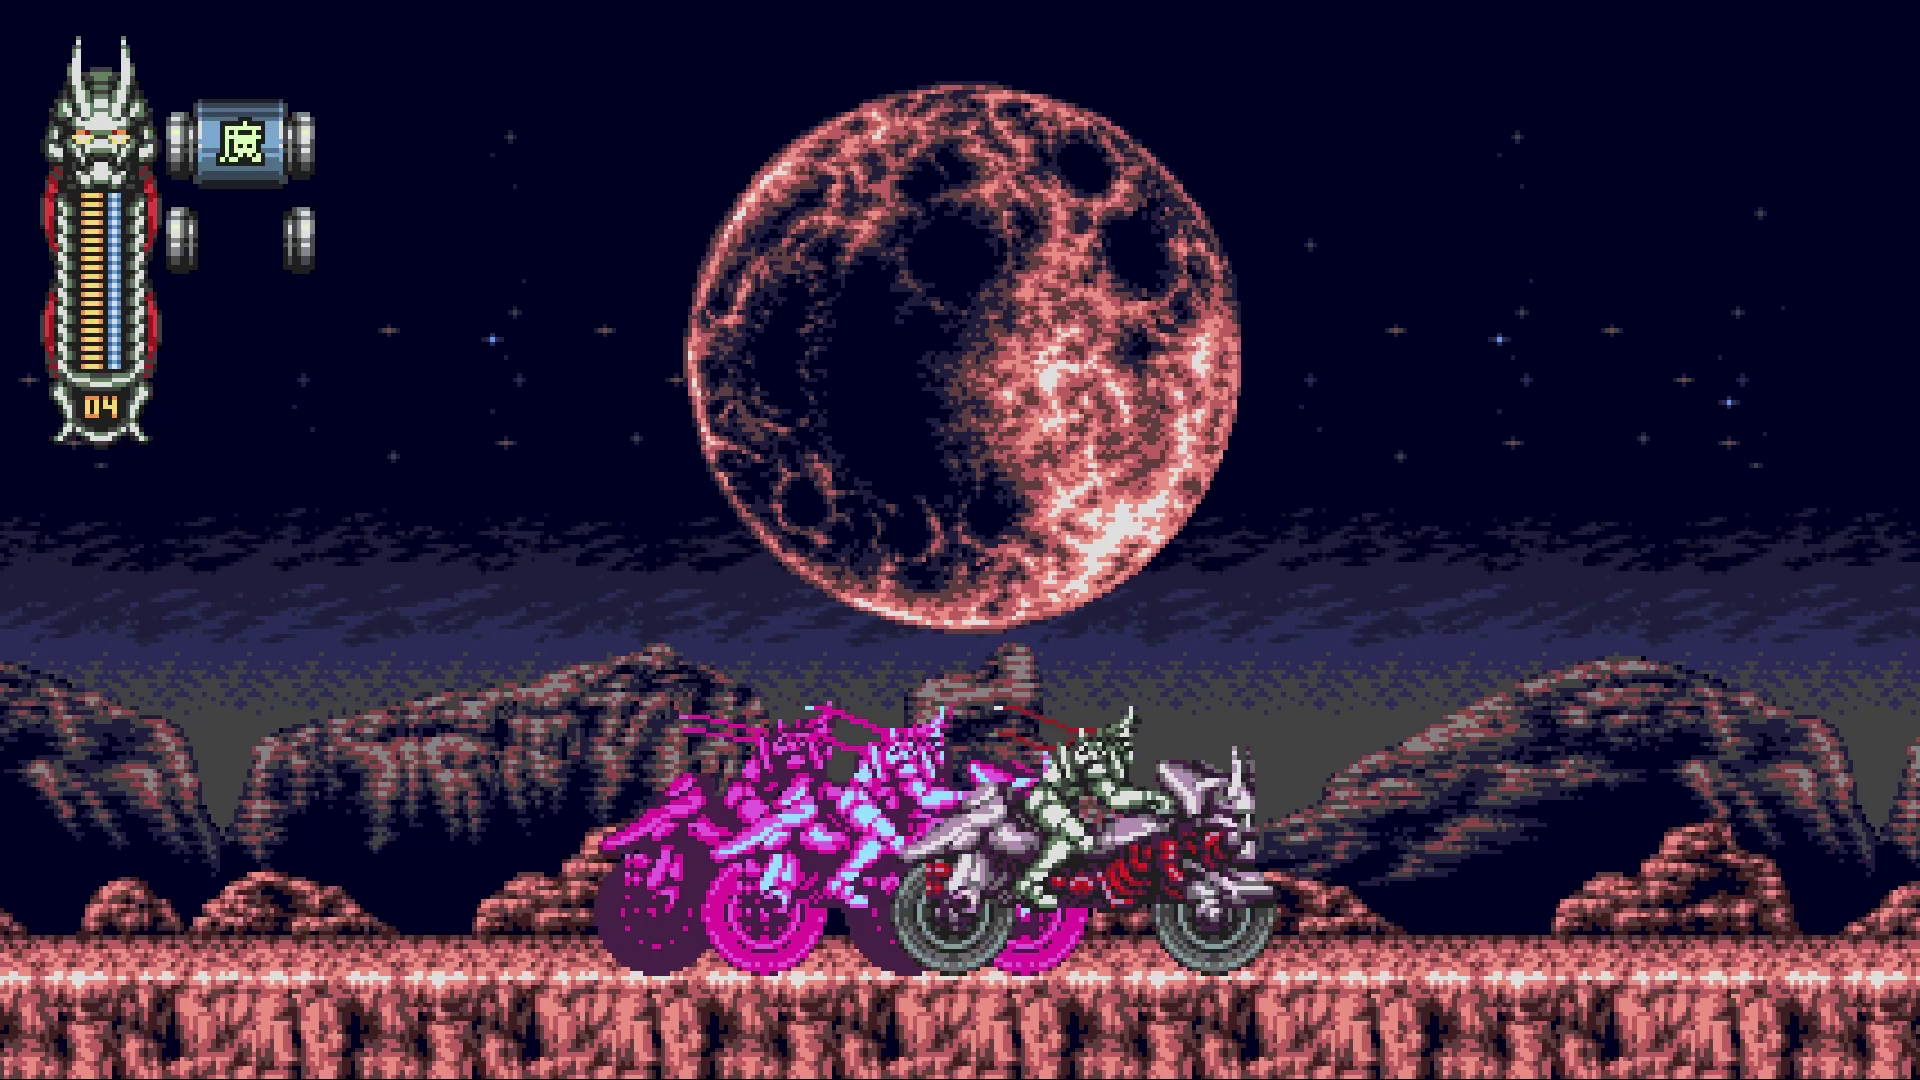 Vengeful Guardian: Moonrider – Slash to the Past